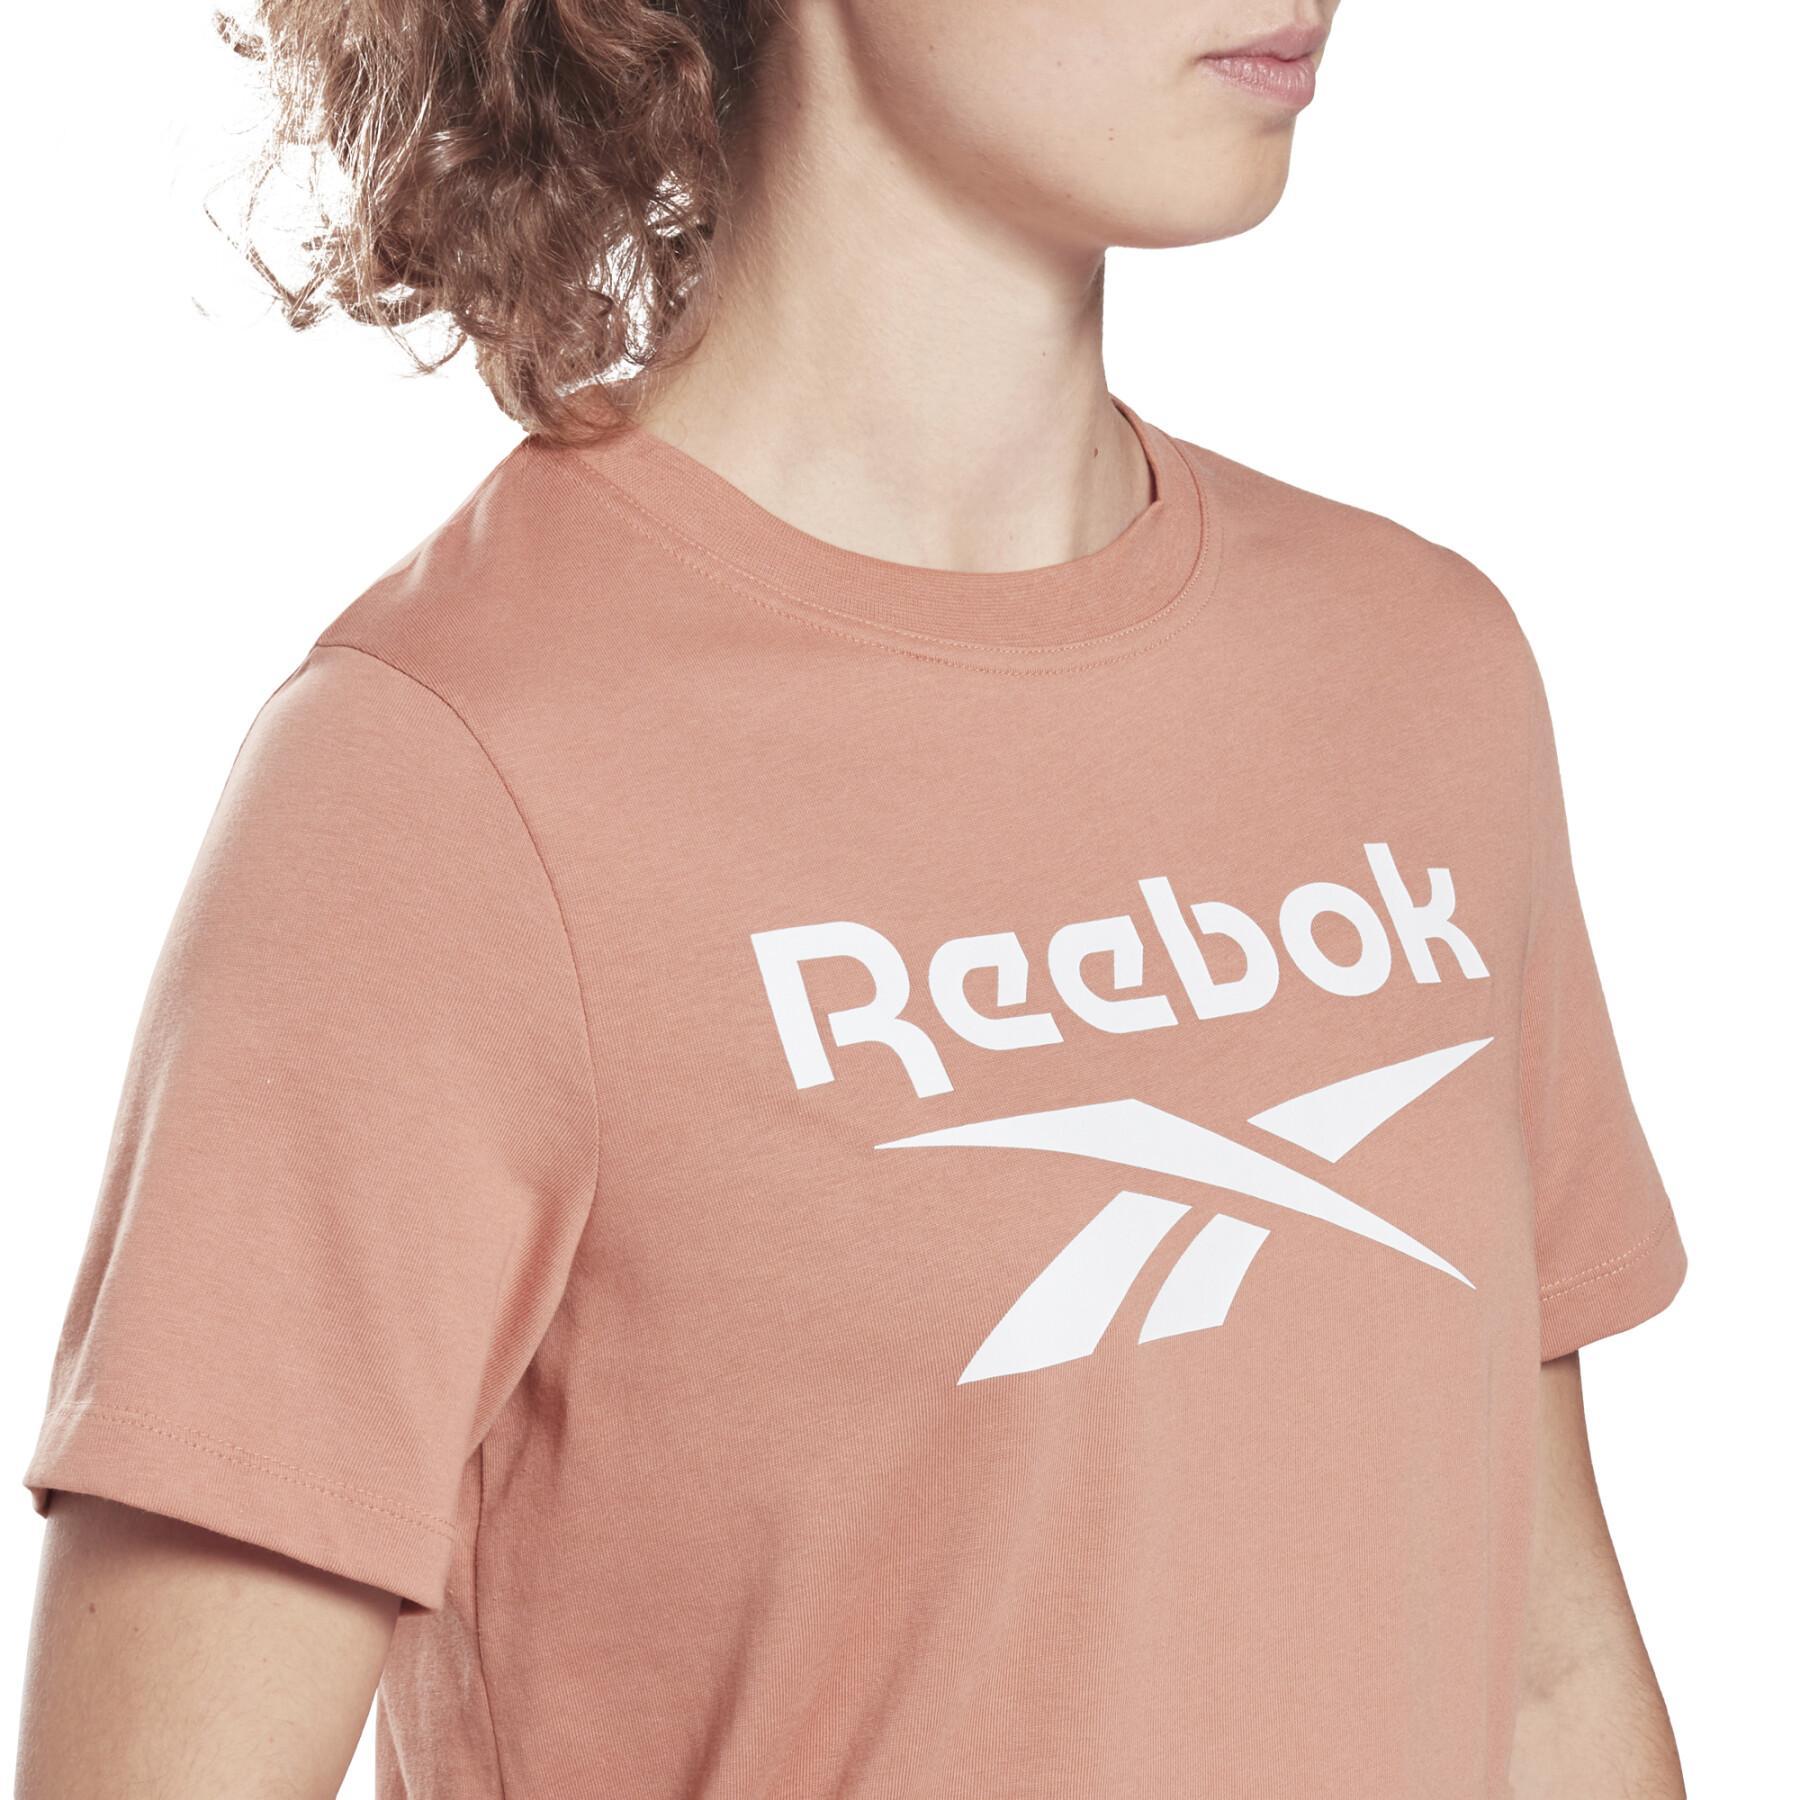 Dames-T-shirt Reebok Identity Big Logo